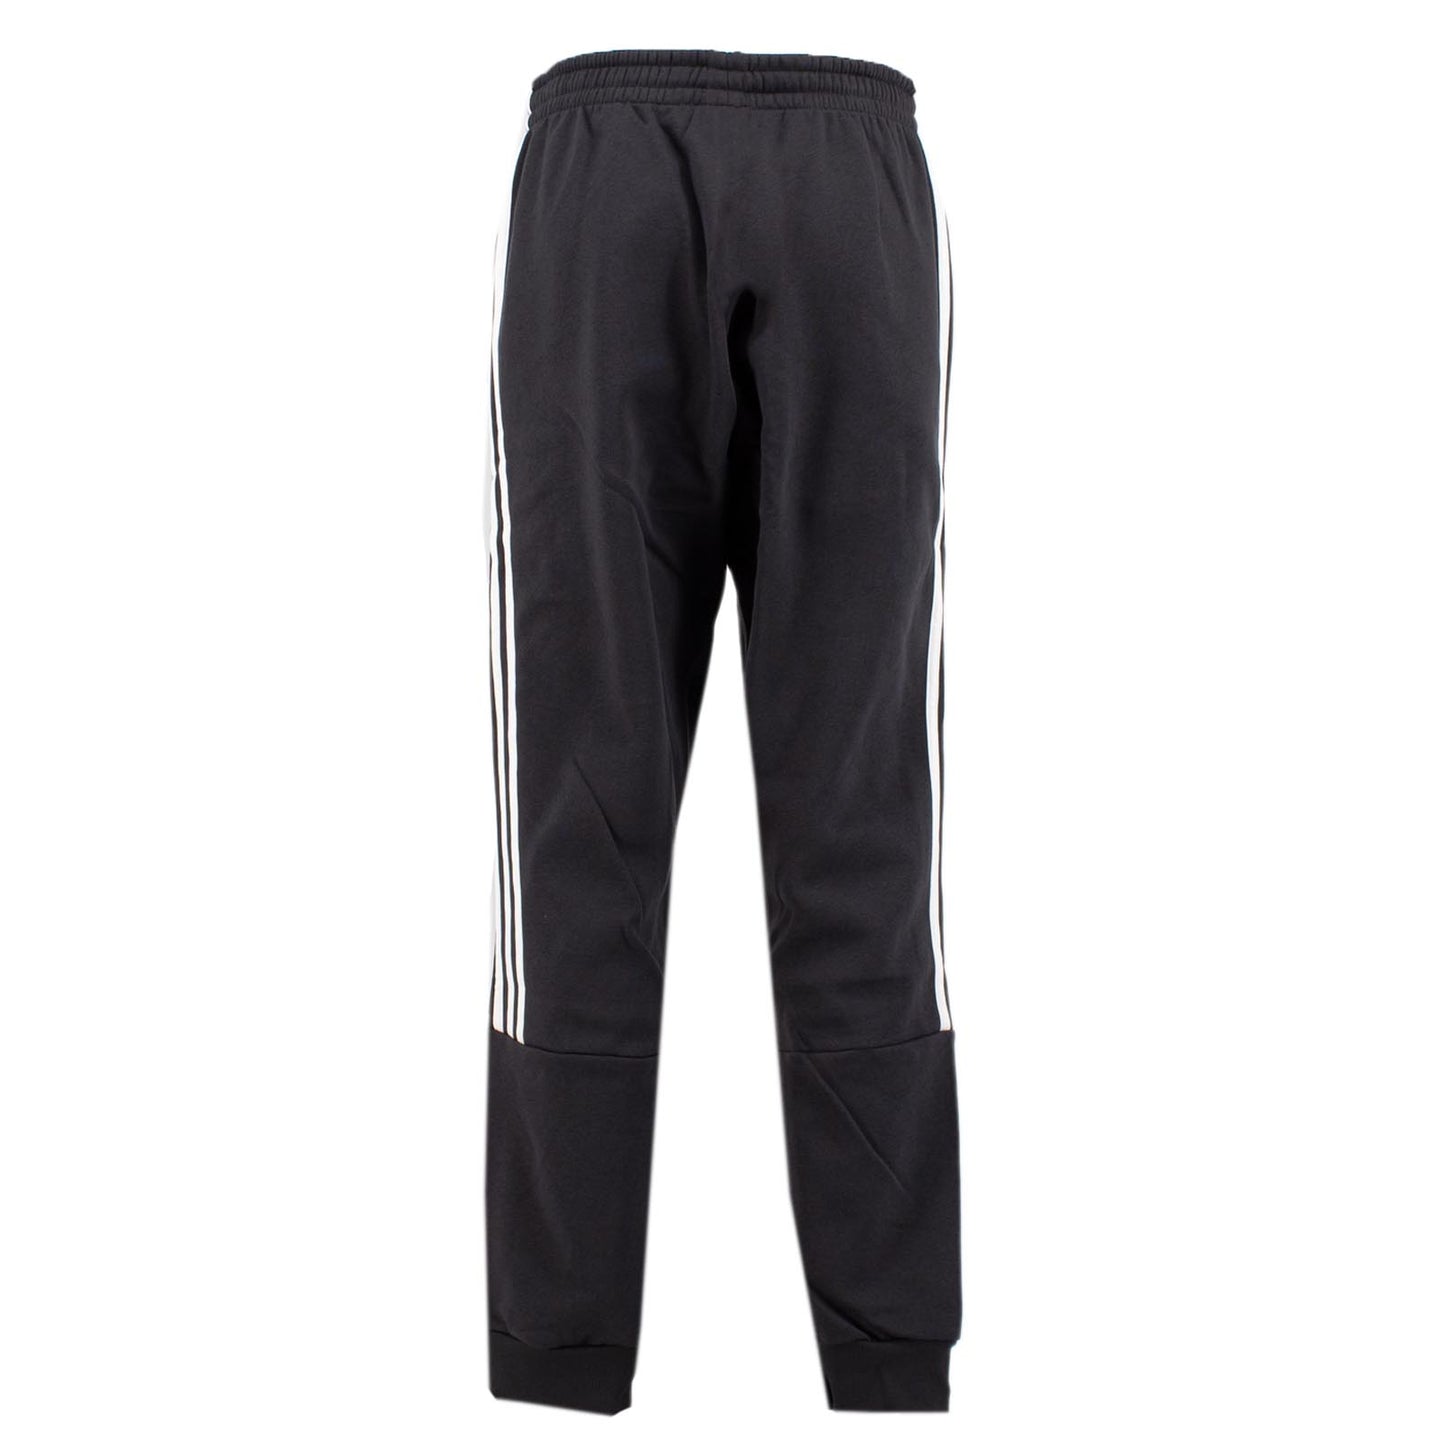 Adidas 3 Stripes Fitness Track Pants Herren Training Hose Jogging Grau FL4846